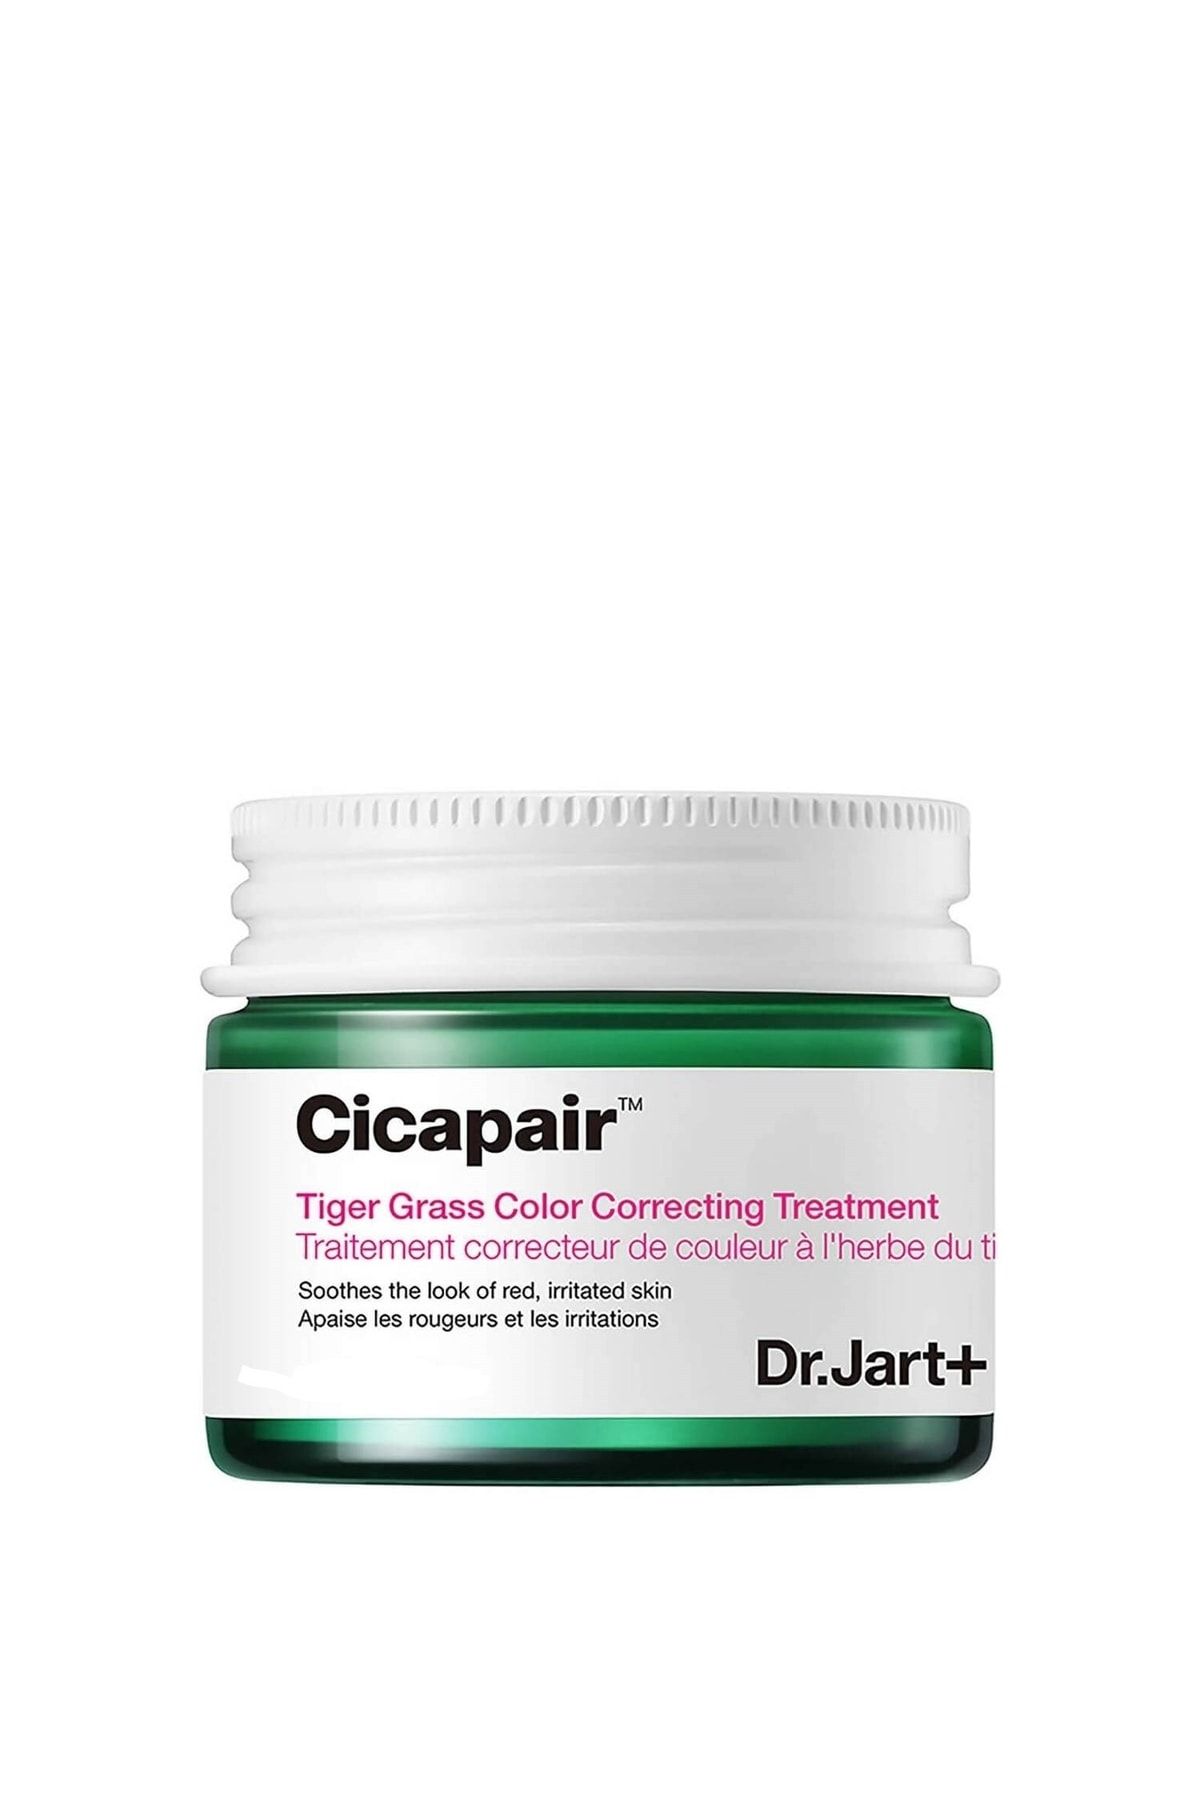 Dr. Jart+ Dr.jart+ Cicapair Tiger Grass Color Correcting Treatment Skin Tone Equalizing Care 50 ml Shooting23